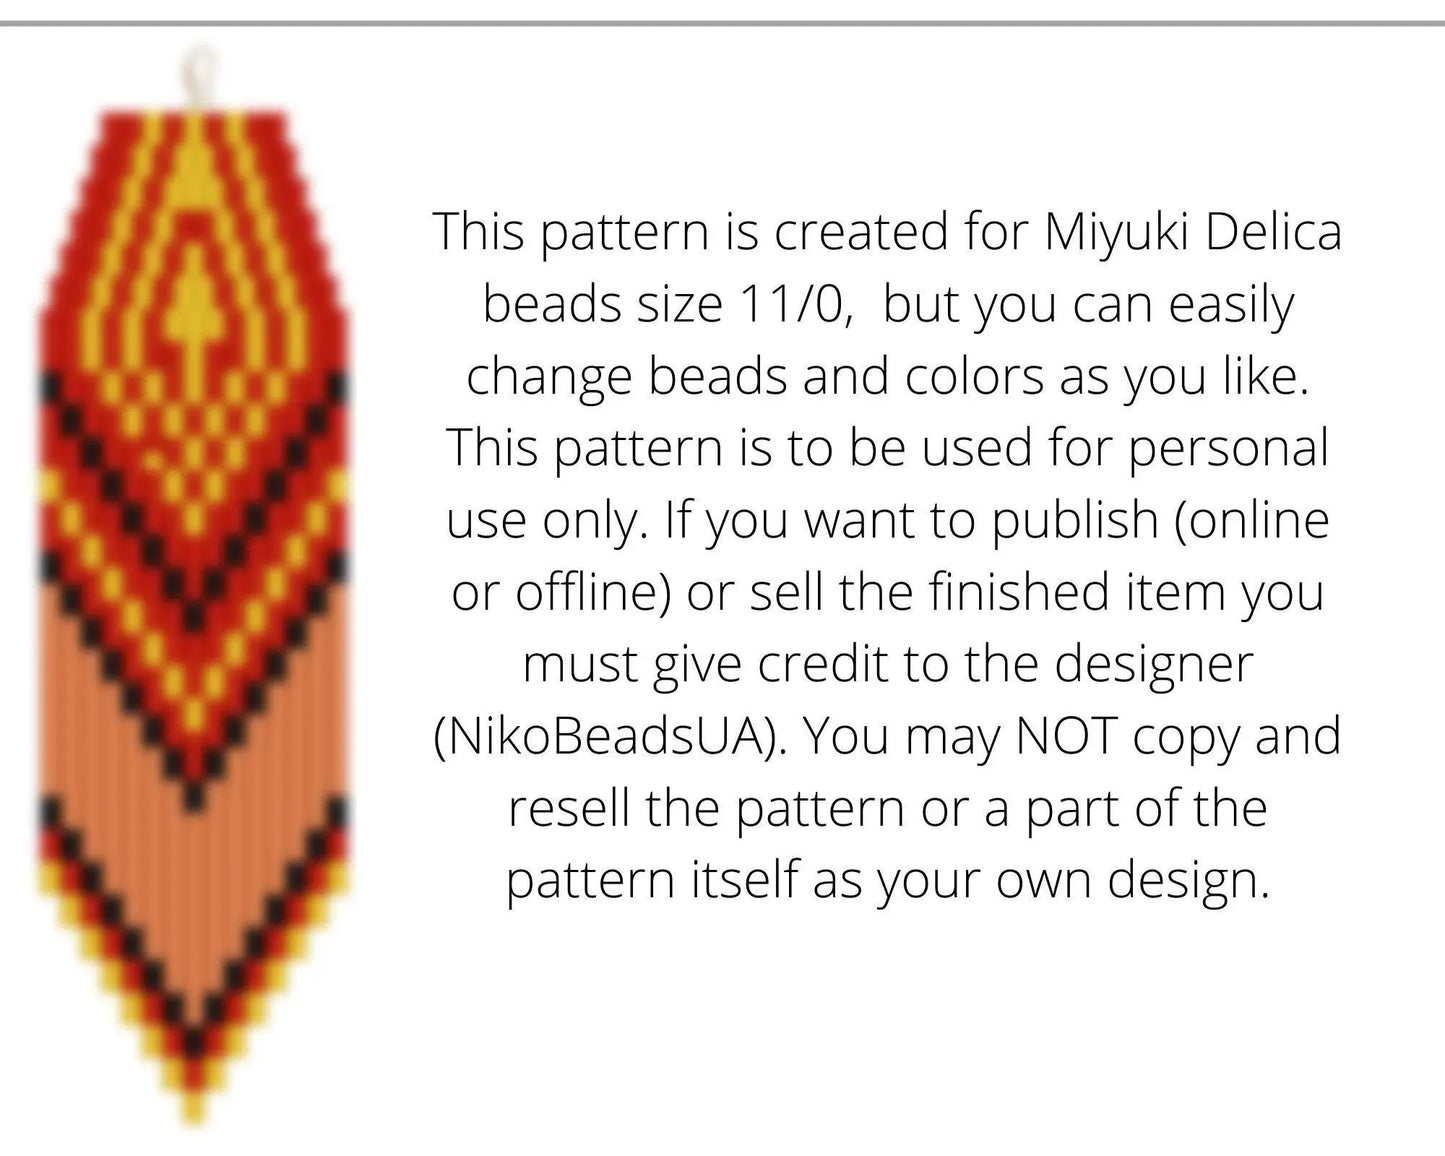 Red Ethnic Brick Stitch pattern for fringe beaded earrings - NikoBeadsUA